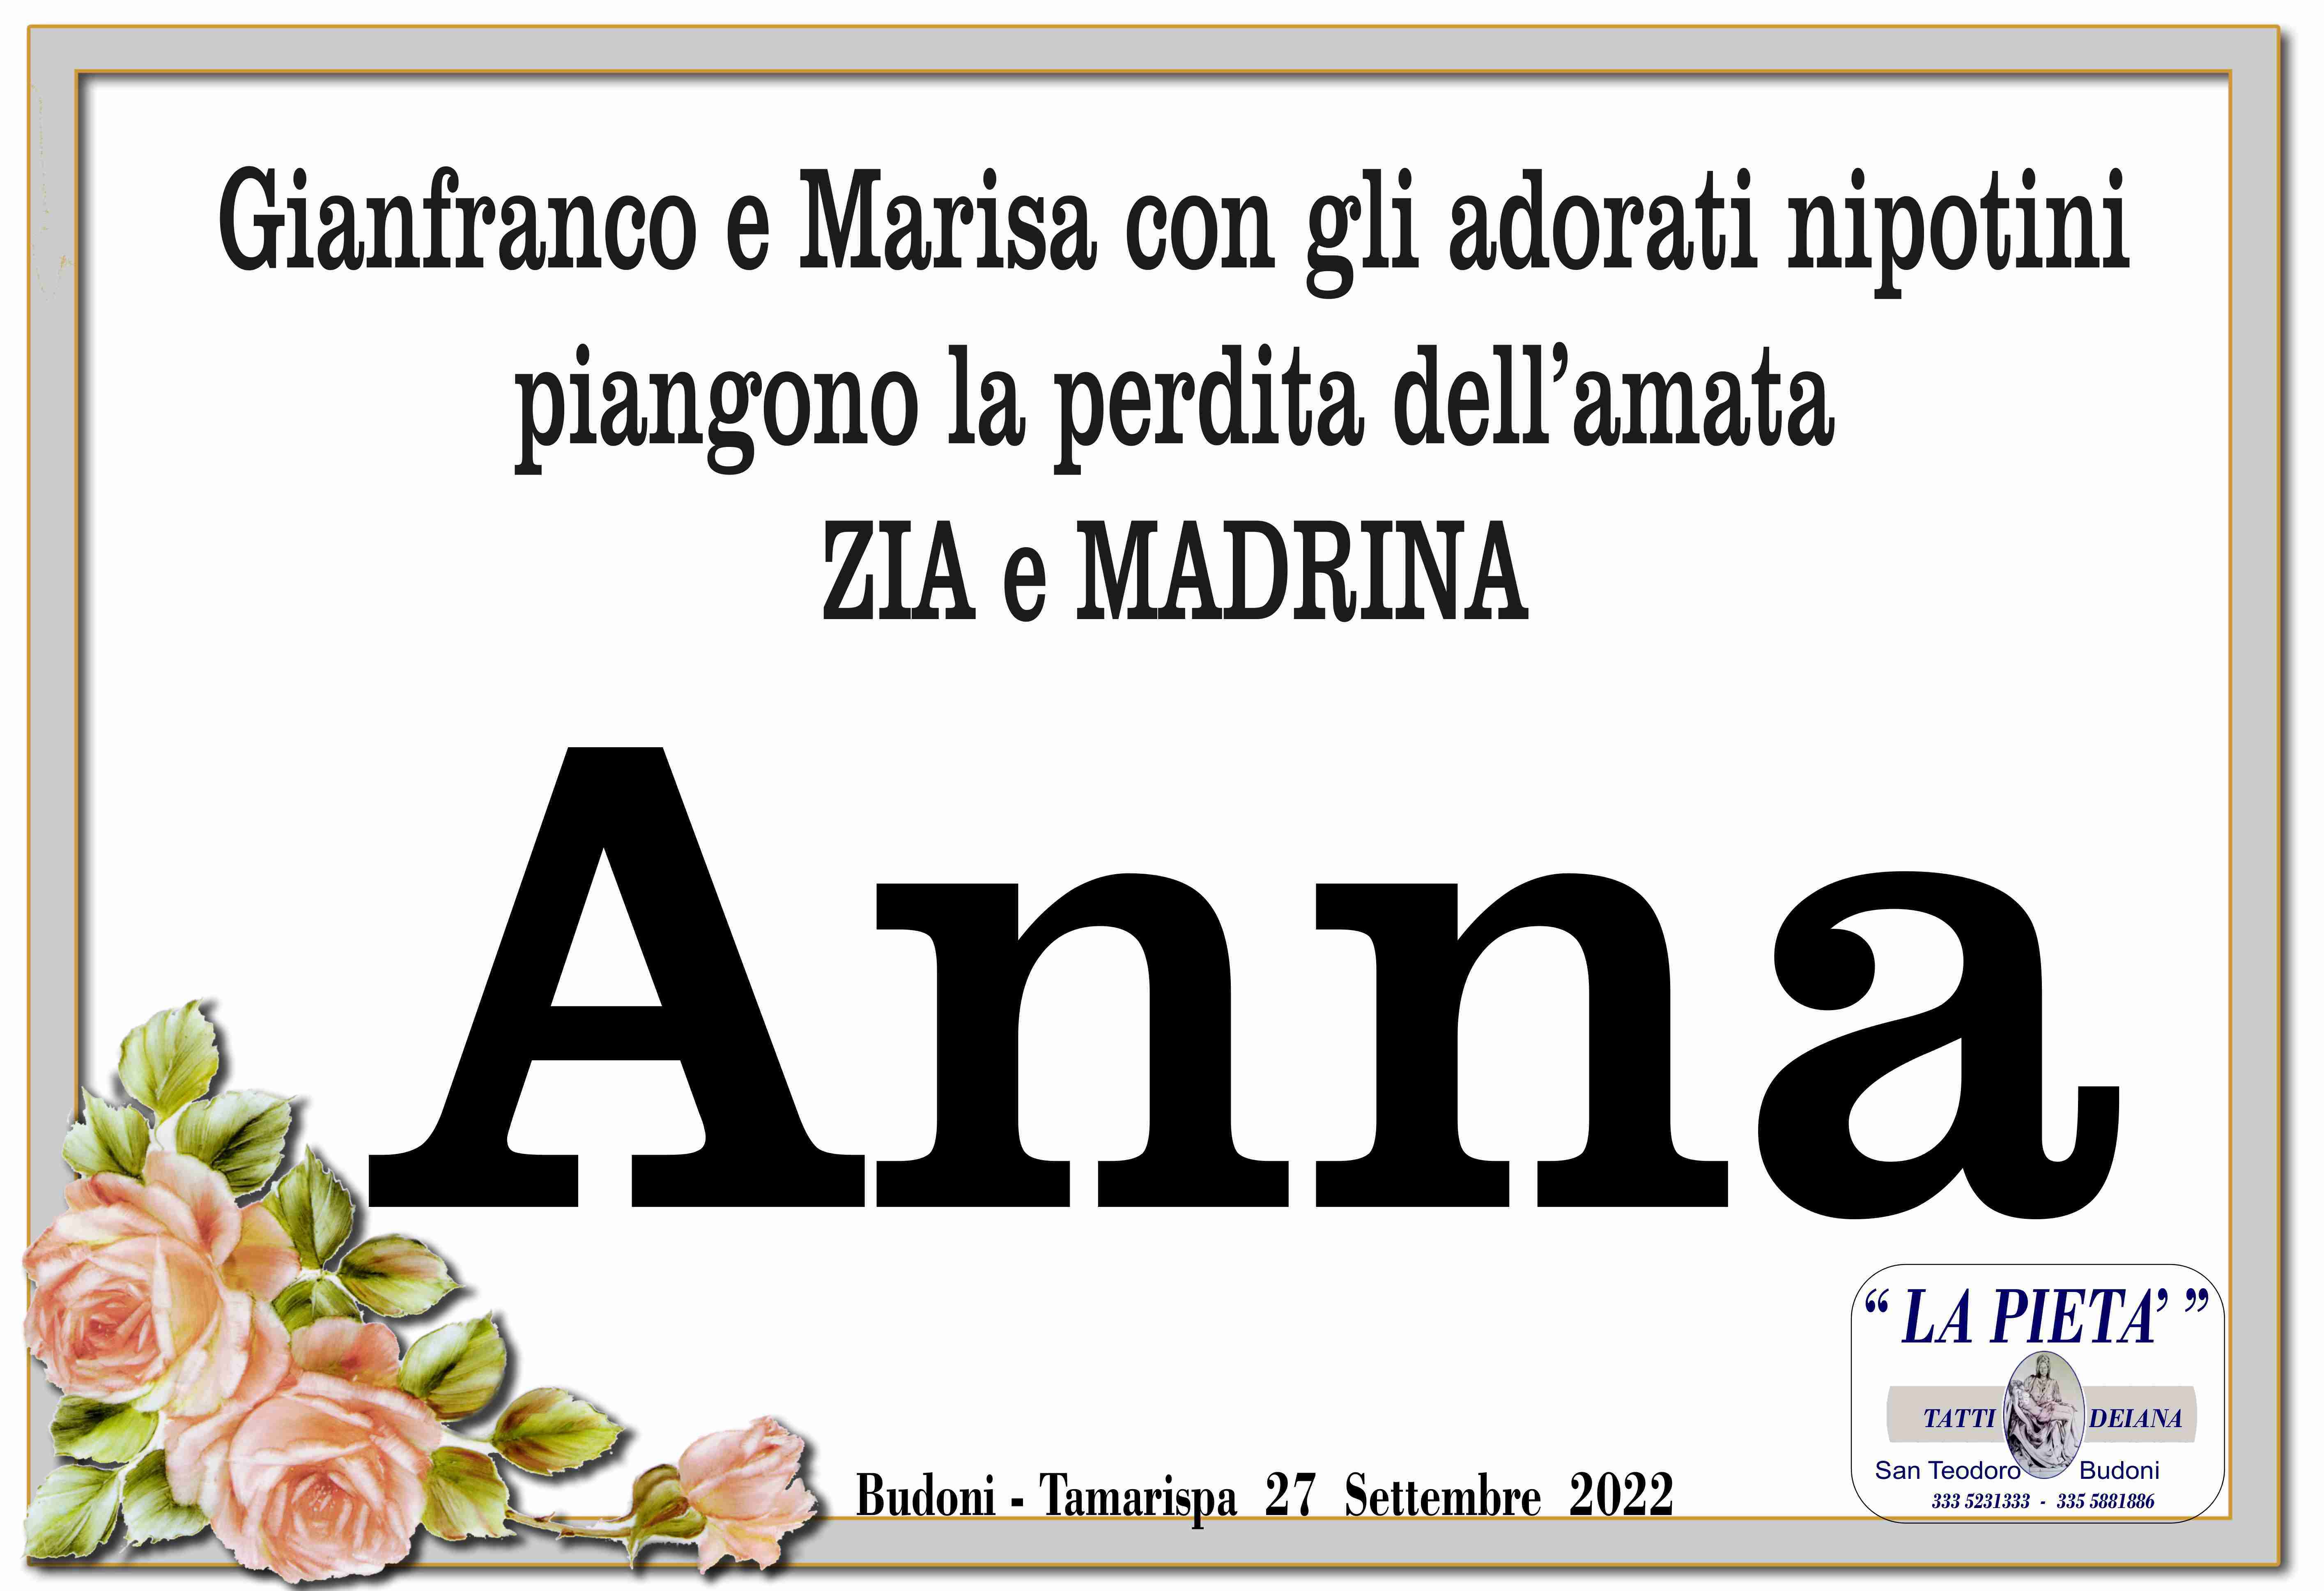 Anna Maria Piredda